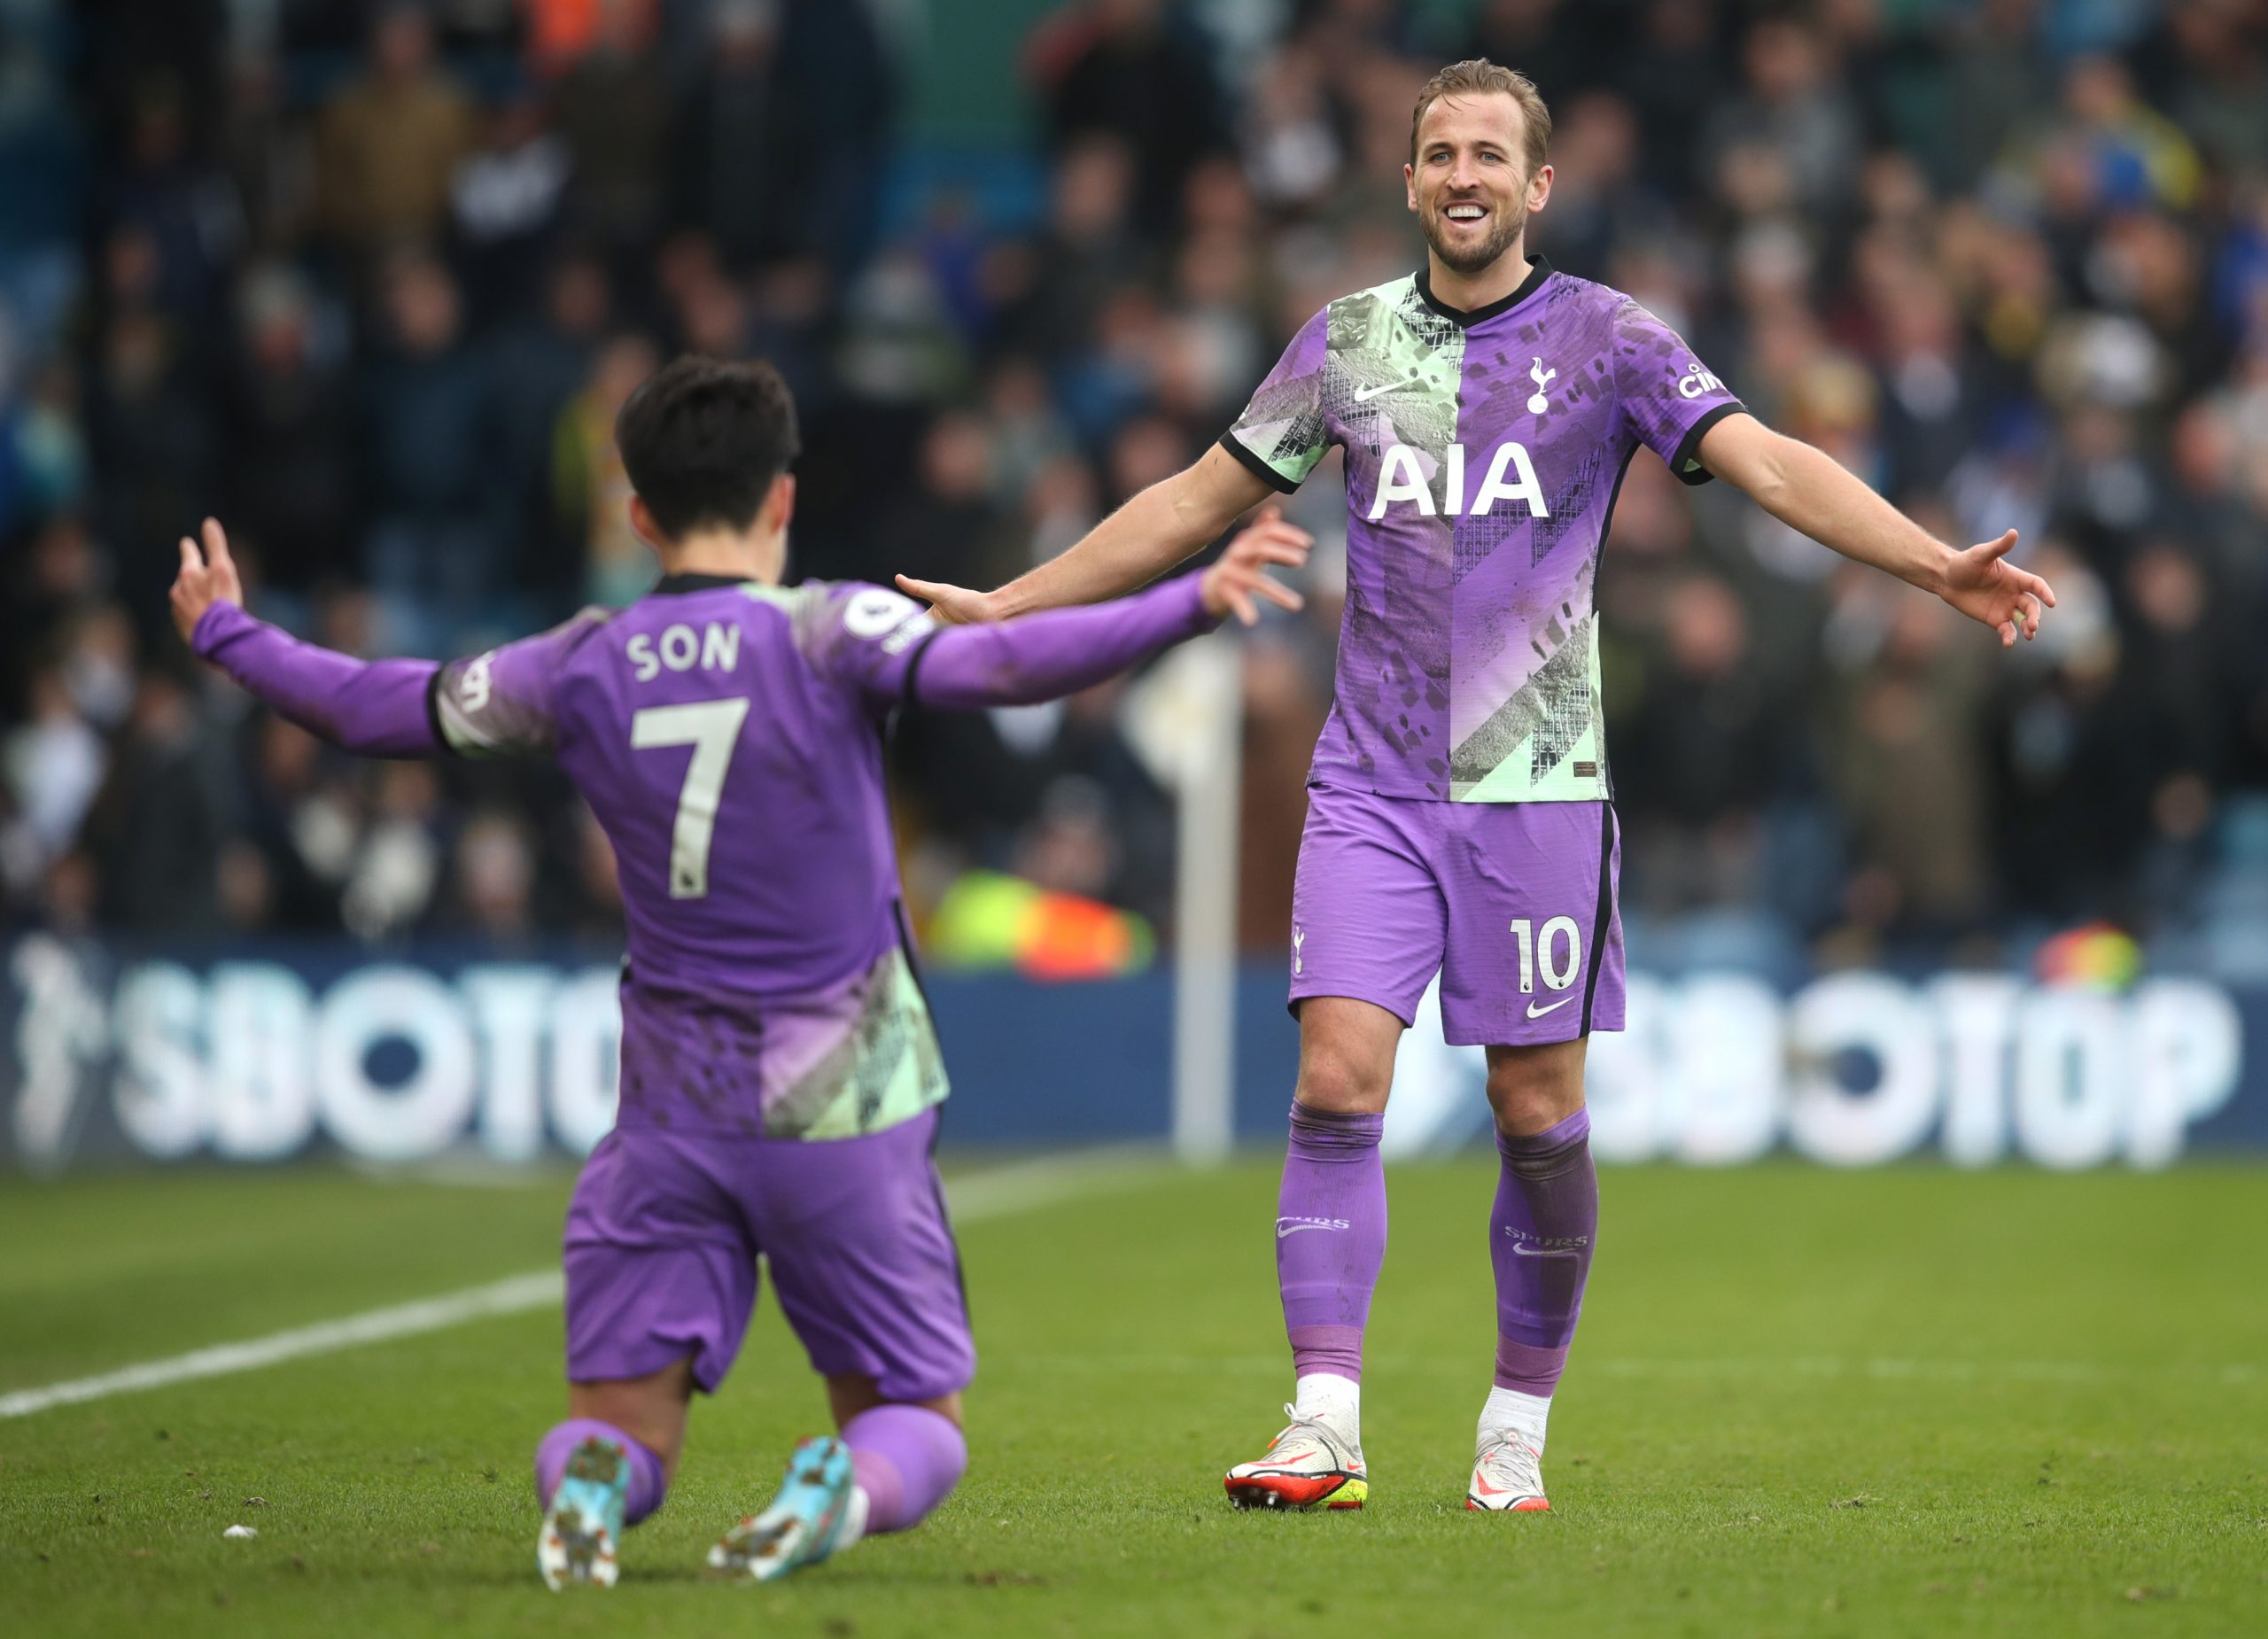 Tottenham Hotspur attackers Son and Kane